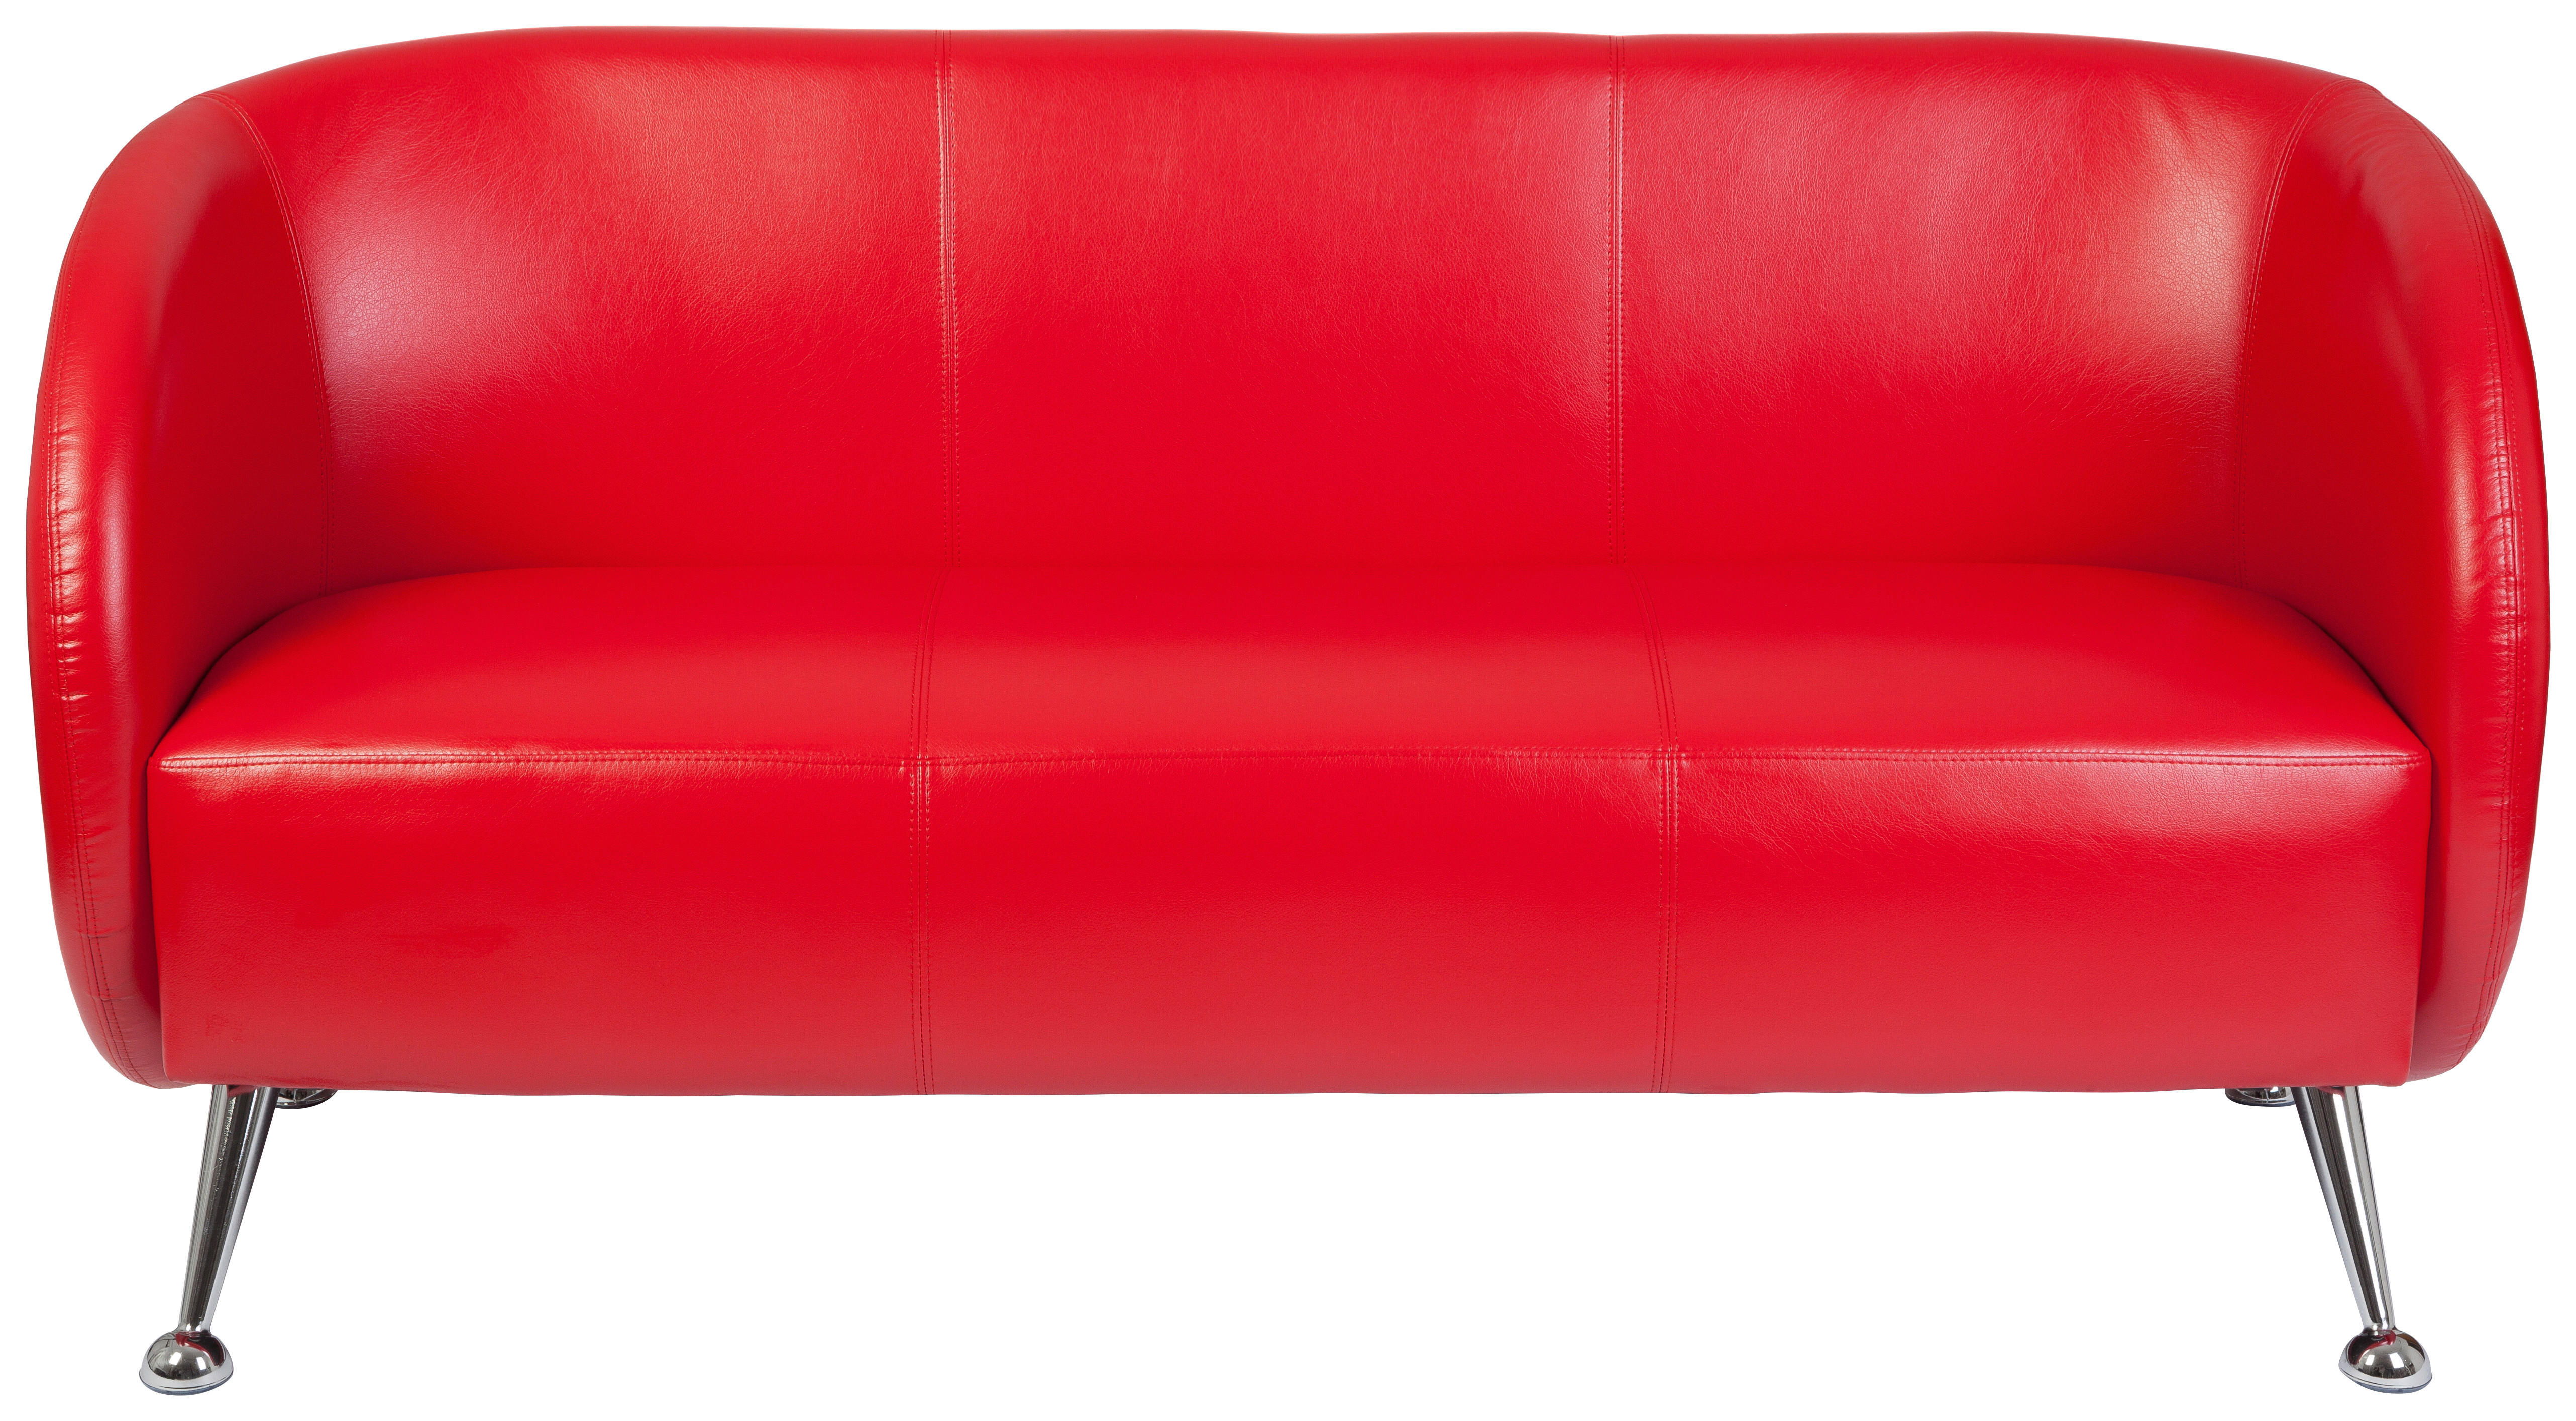 DREISITZER-SOFA Lederlook Rot  - Chromfarben/Rot, MODERN, Textil/Metall (168/85/58cm) - MID.YOU